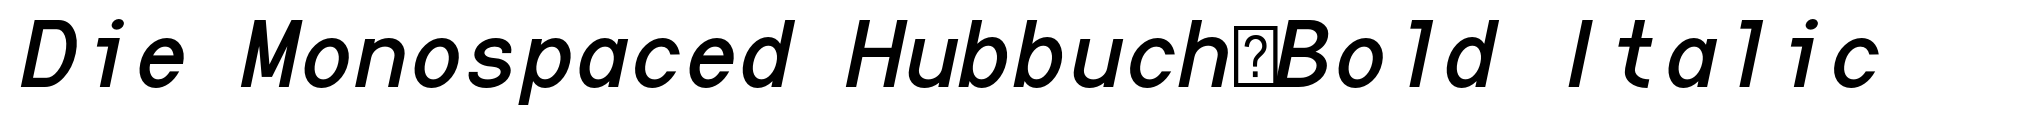 Die Monospaced Hubbuch-Bold Italic image